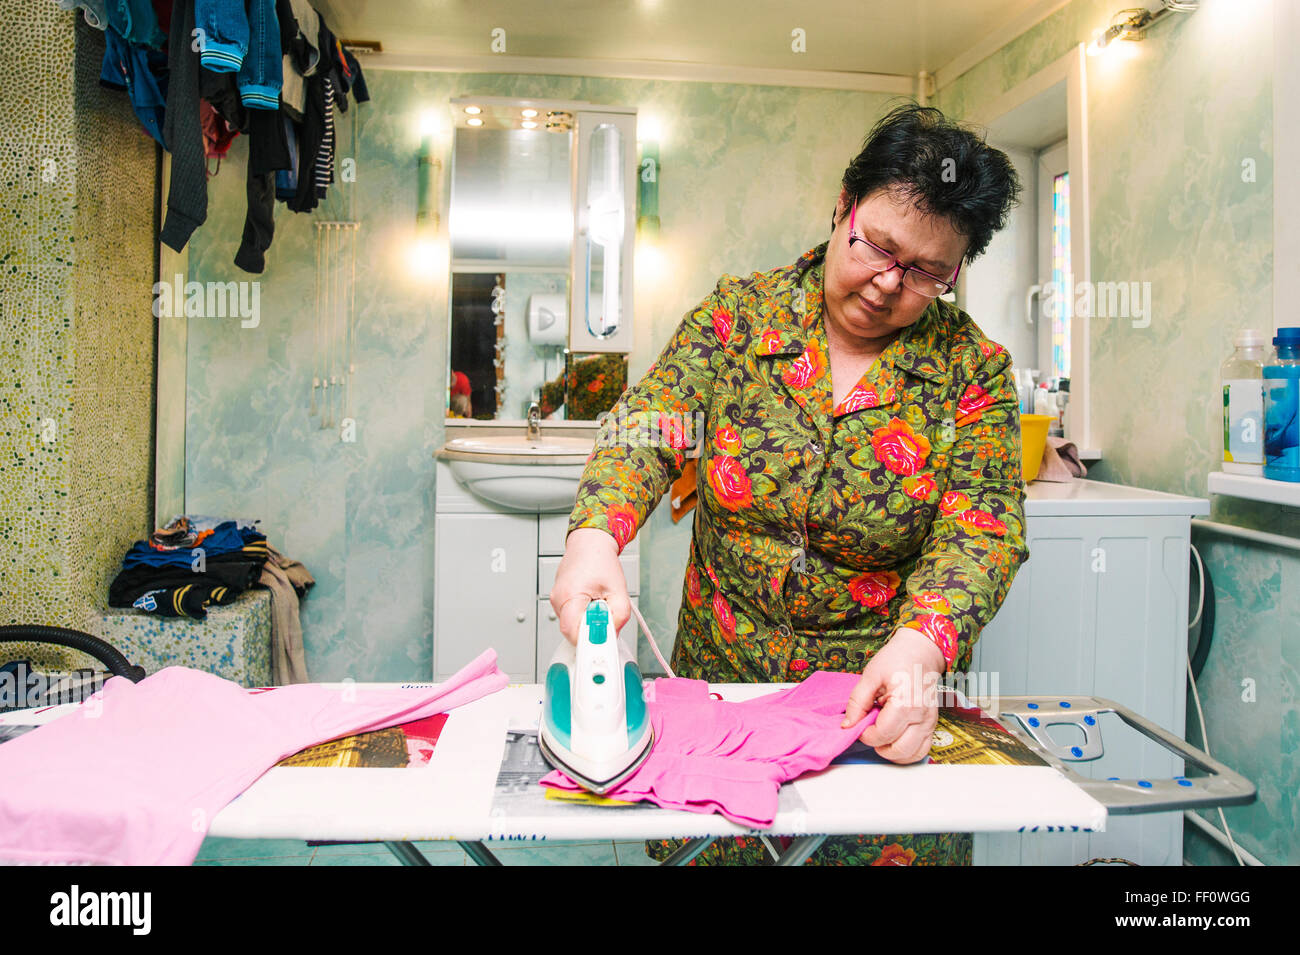 Caucasian woman ironing laundry Stock Photo